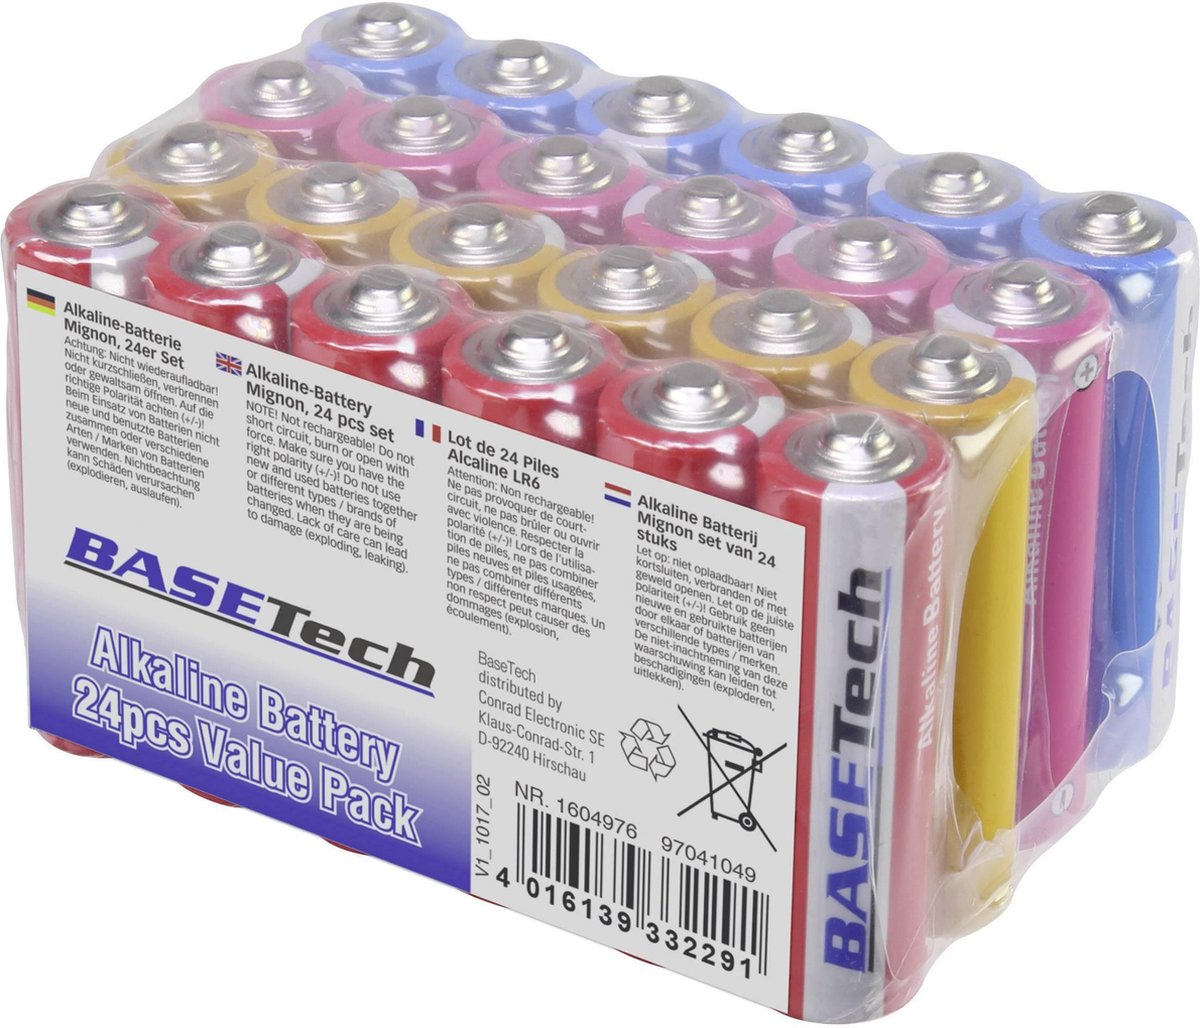 Basetech AA batterij (penlite) Alkaline 2650 mAh 1.5 V 24 stuk(s)